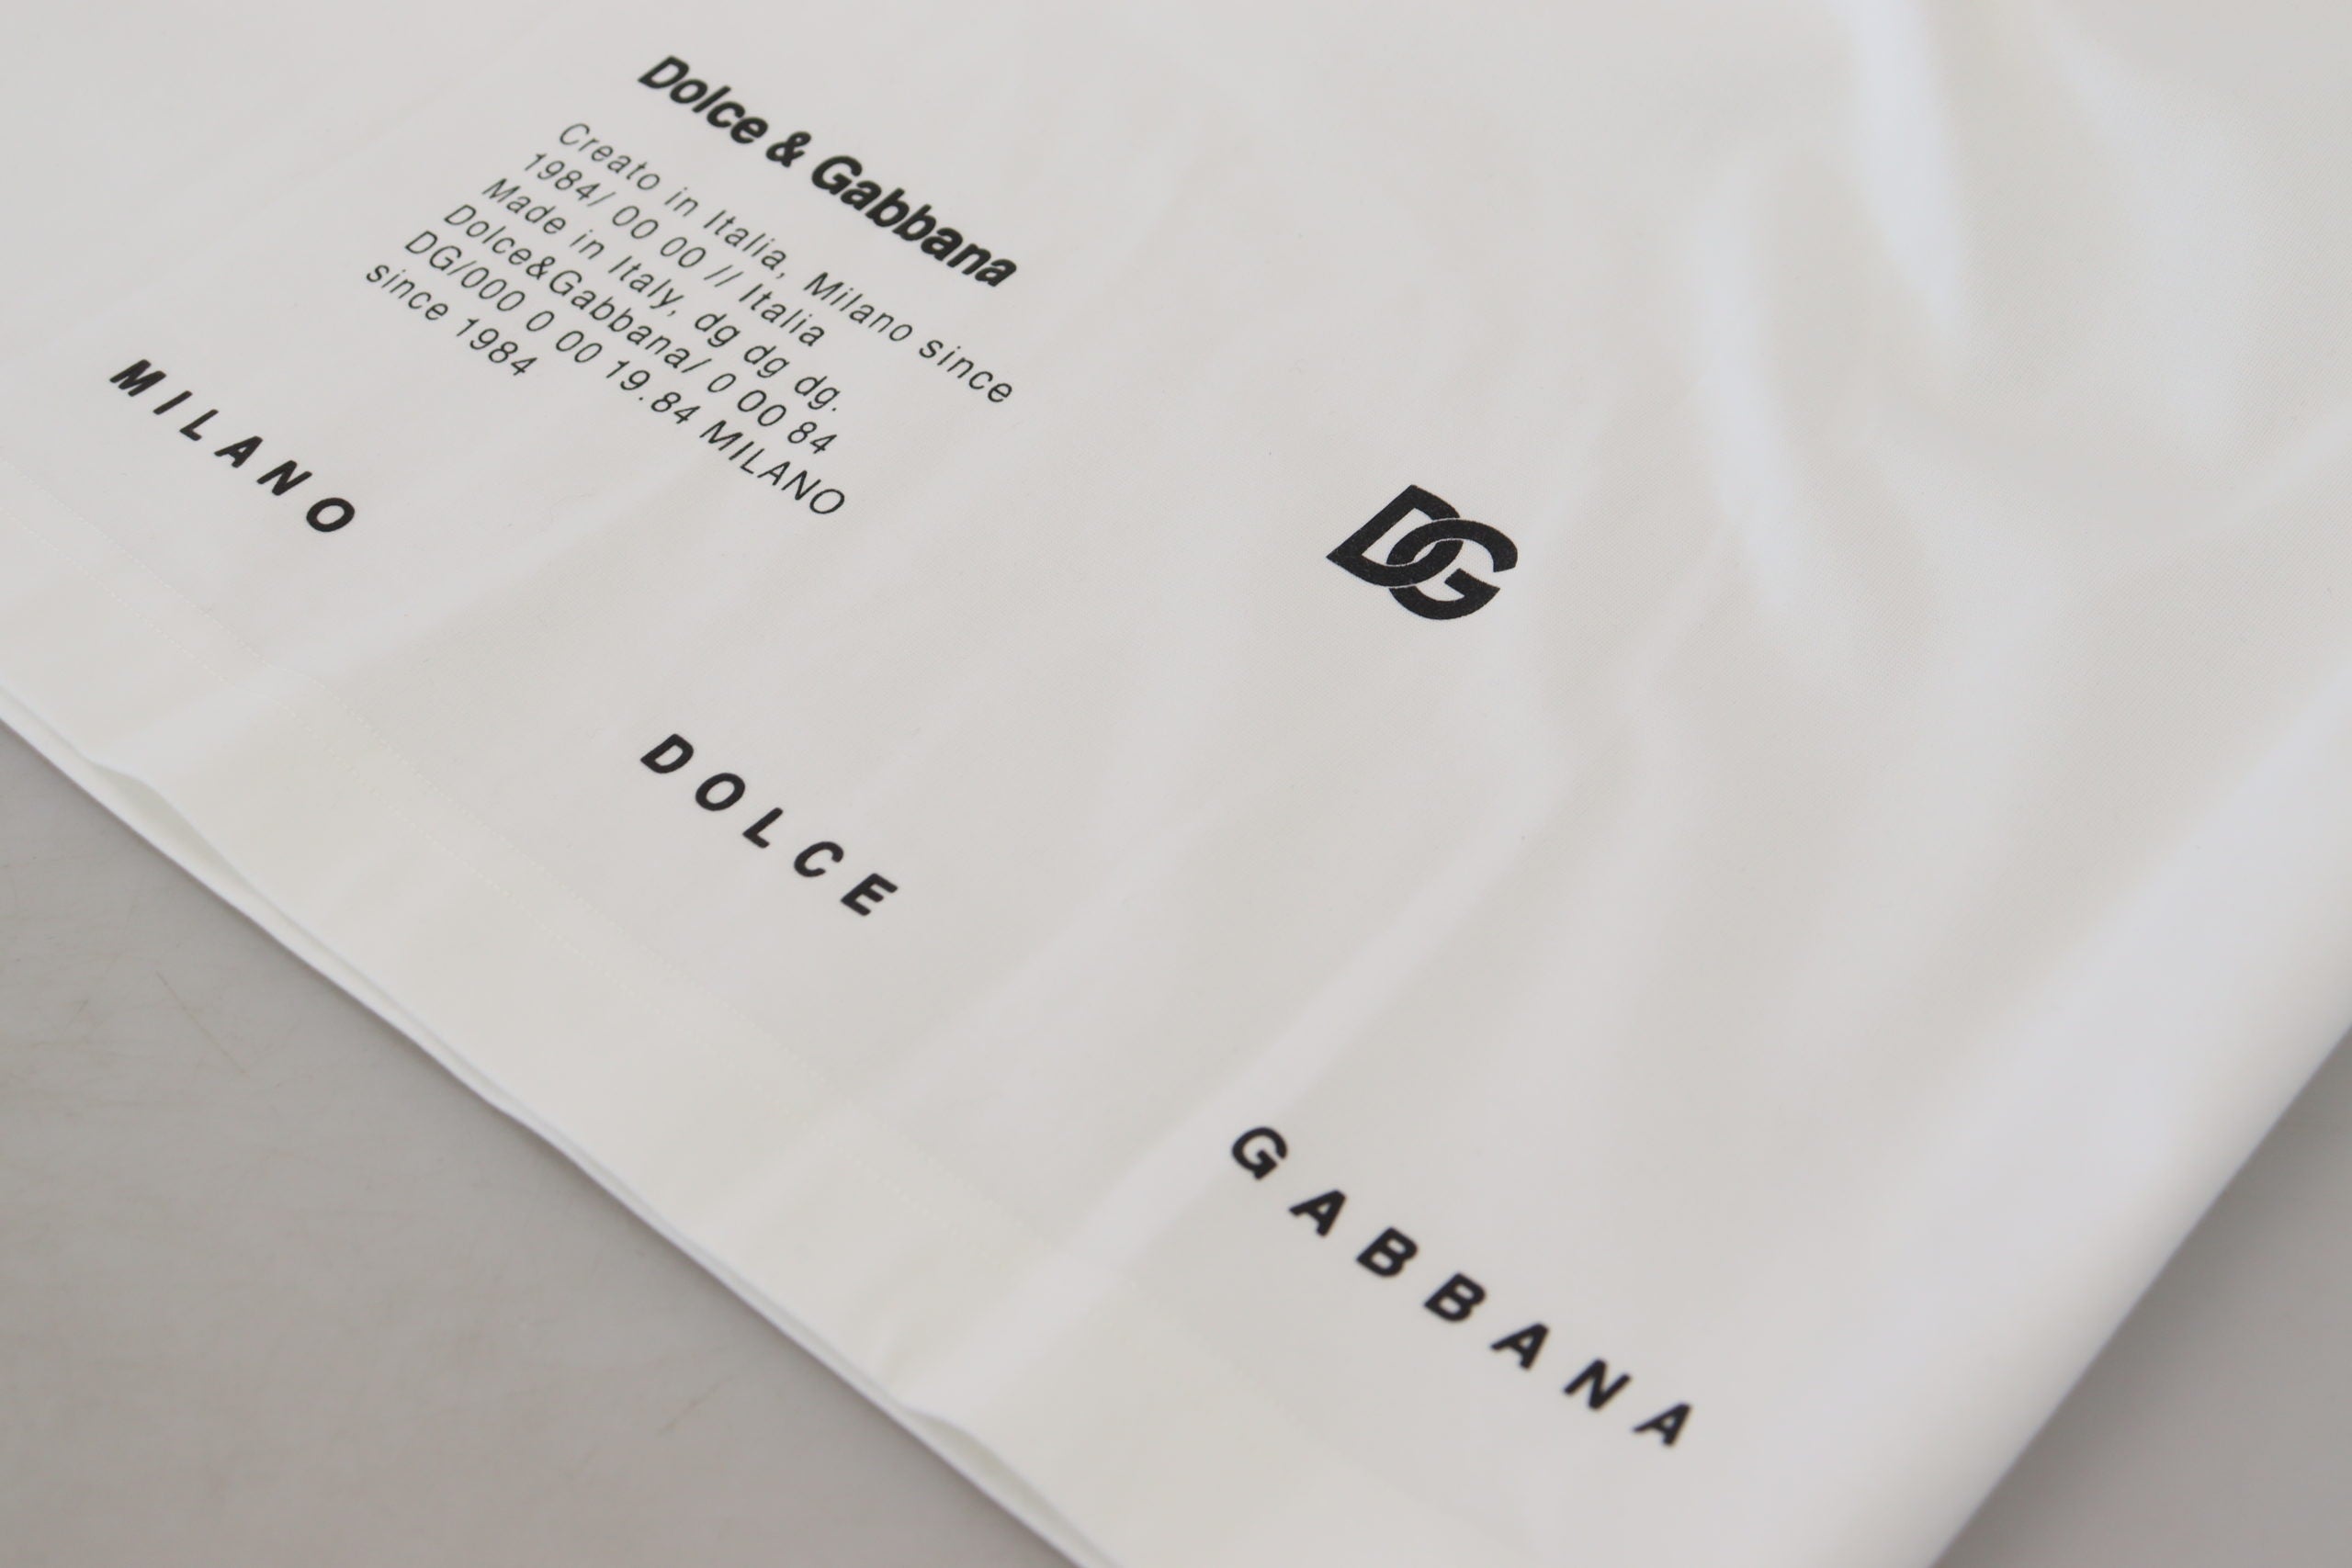 Dolce & Gabbana White Printed Short Sleeves Men T-shirt